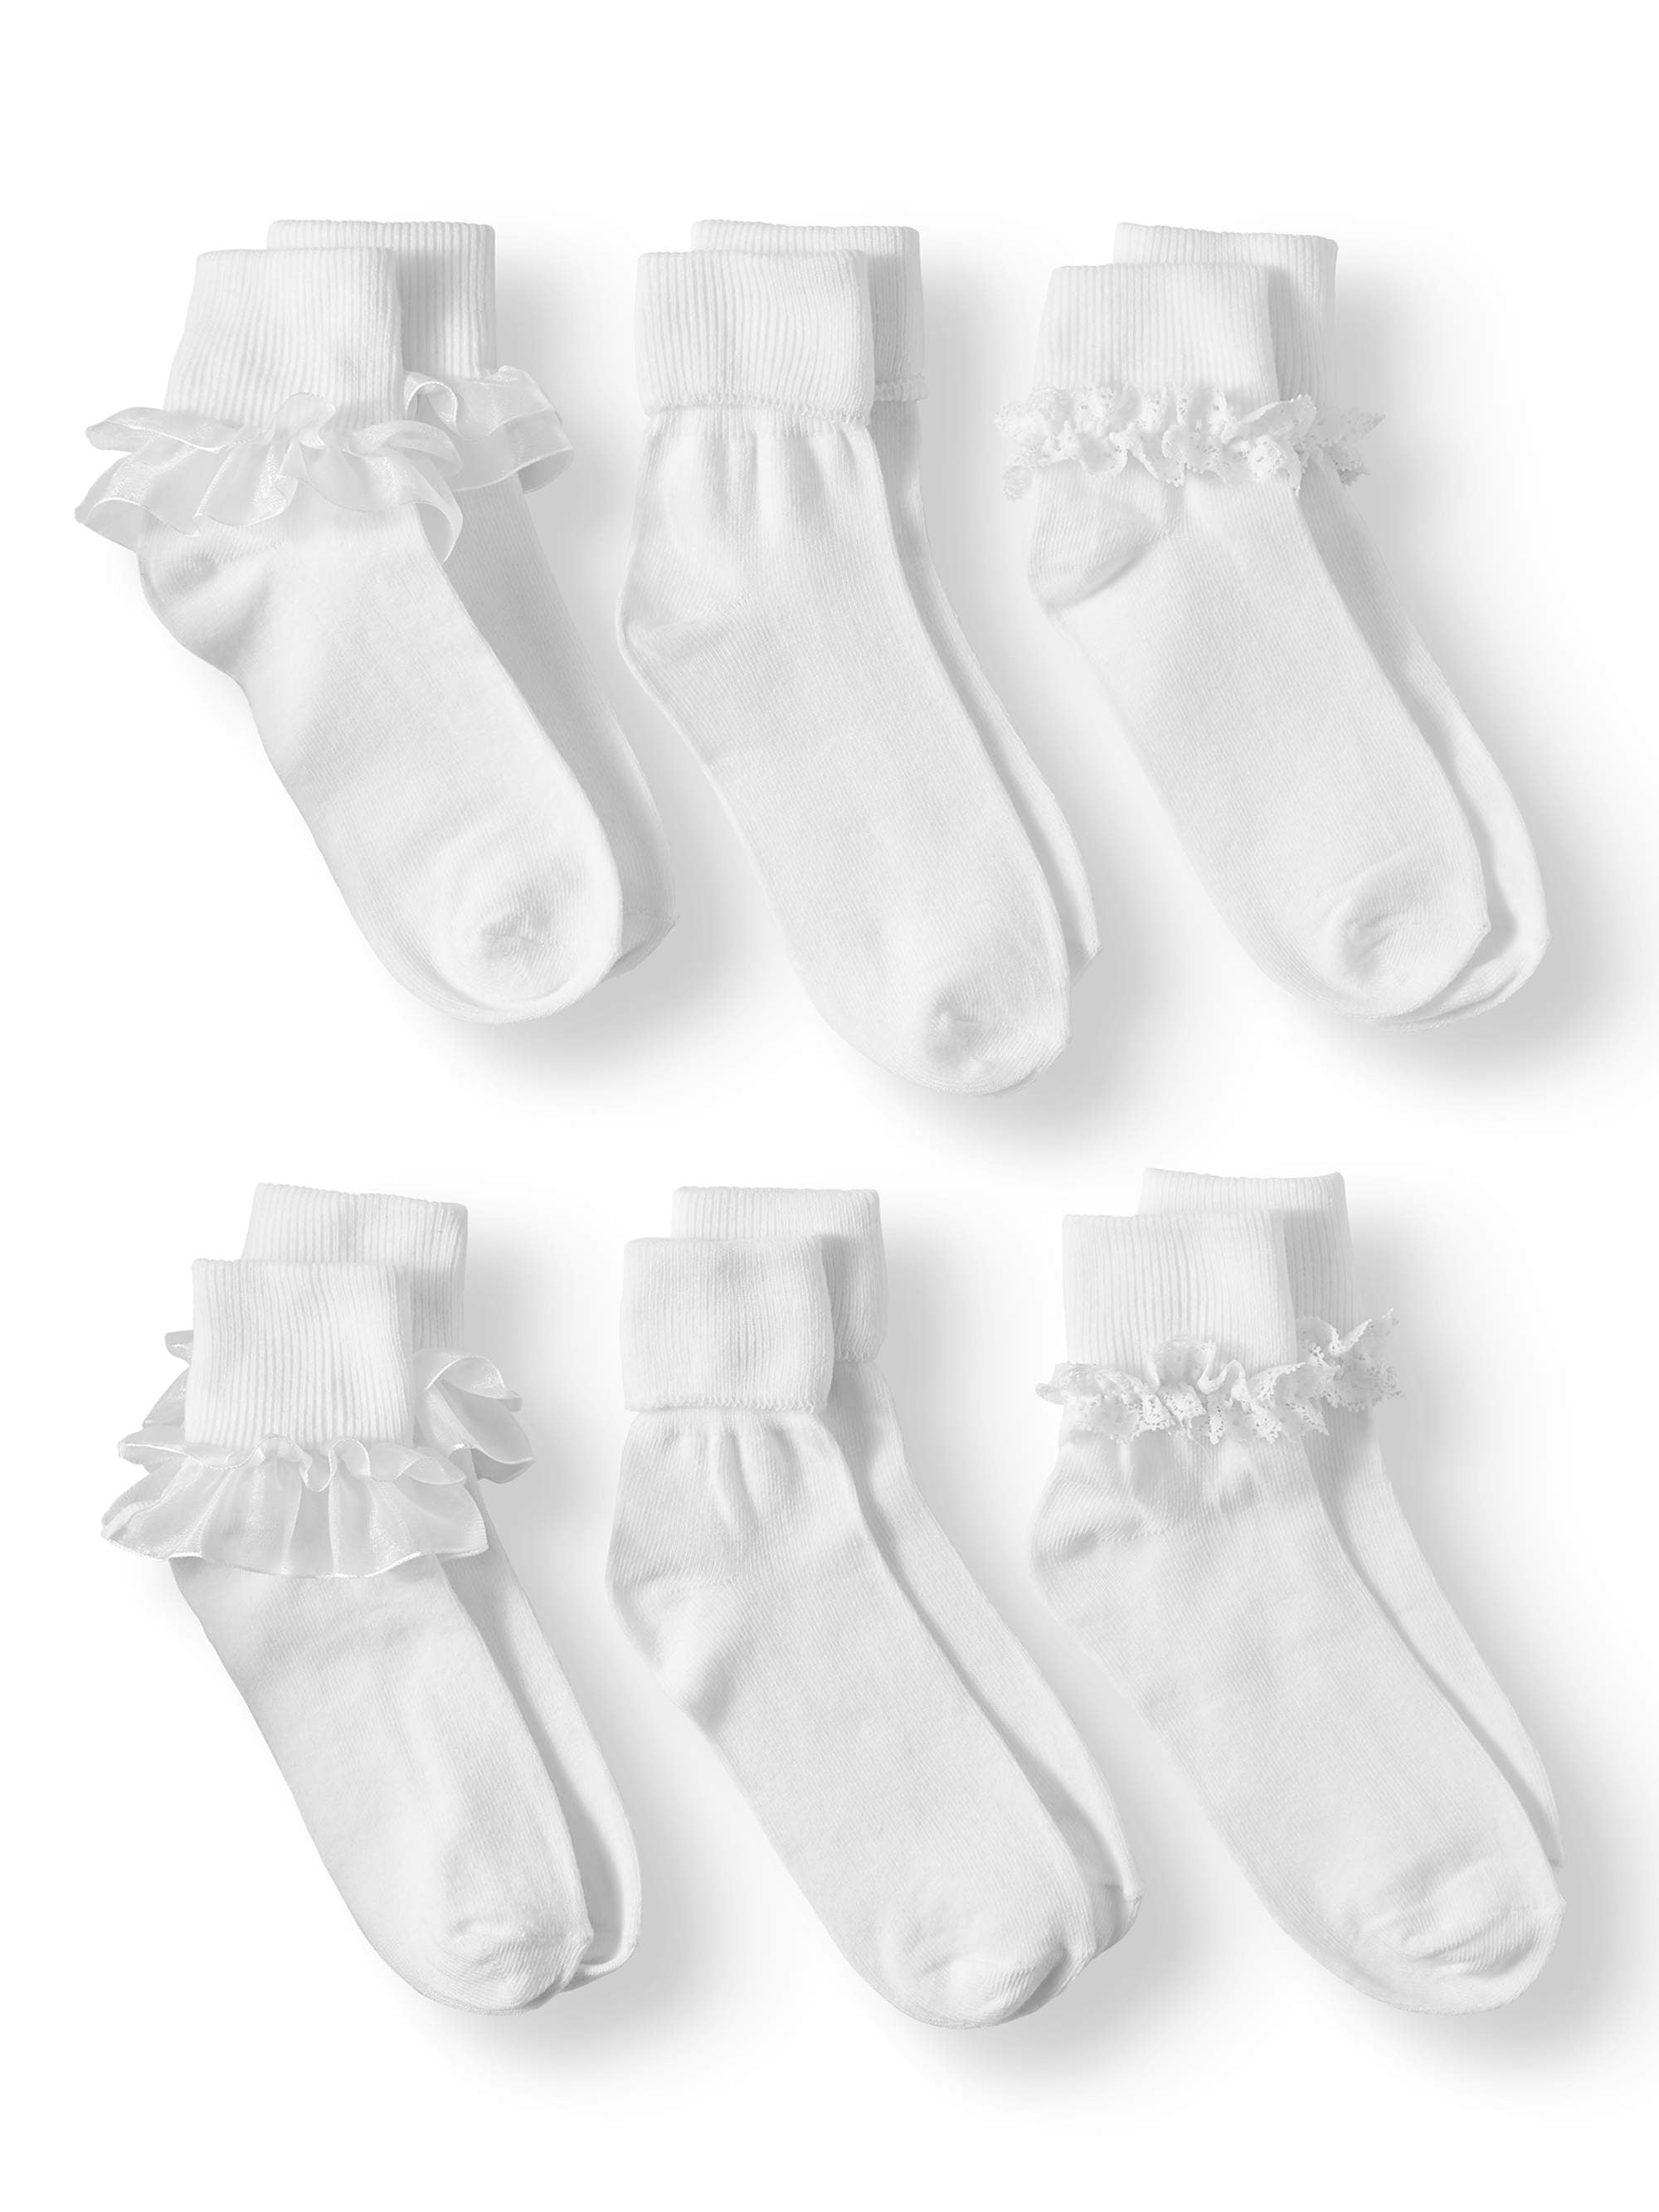 CeeDeek Girl's Cotton Socks Lace Anklet Socks Princess Dress Socks Packs of 5